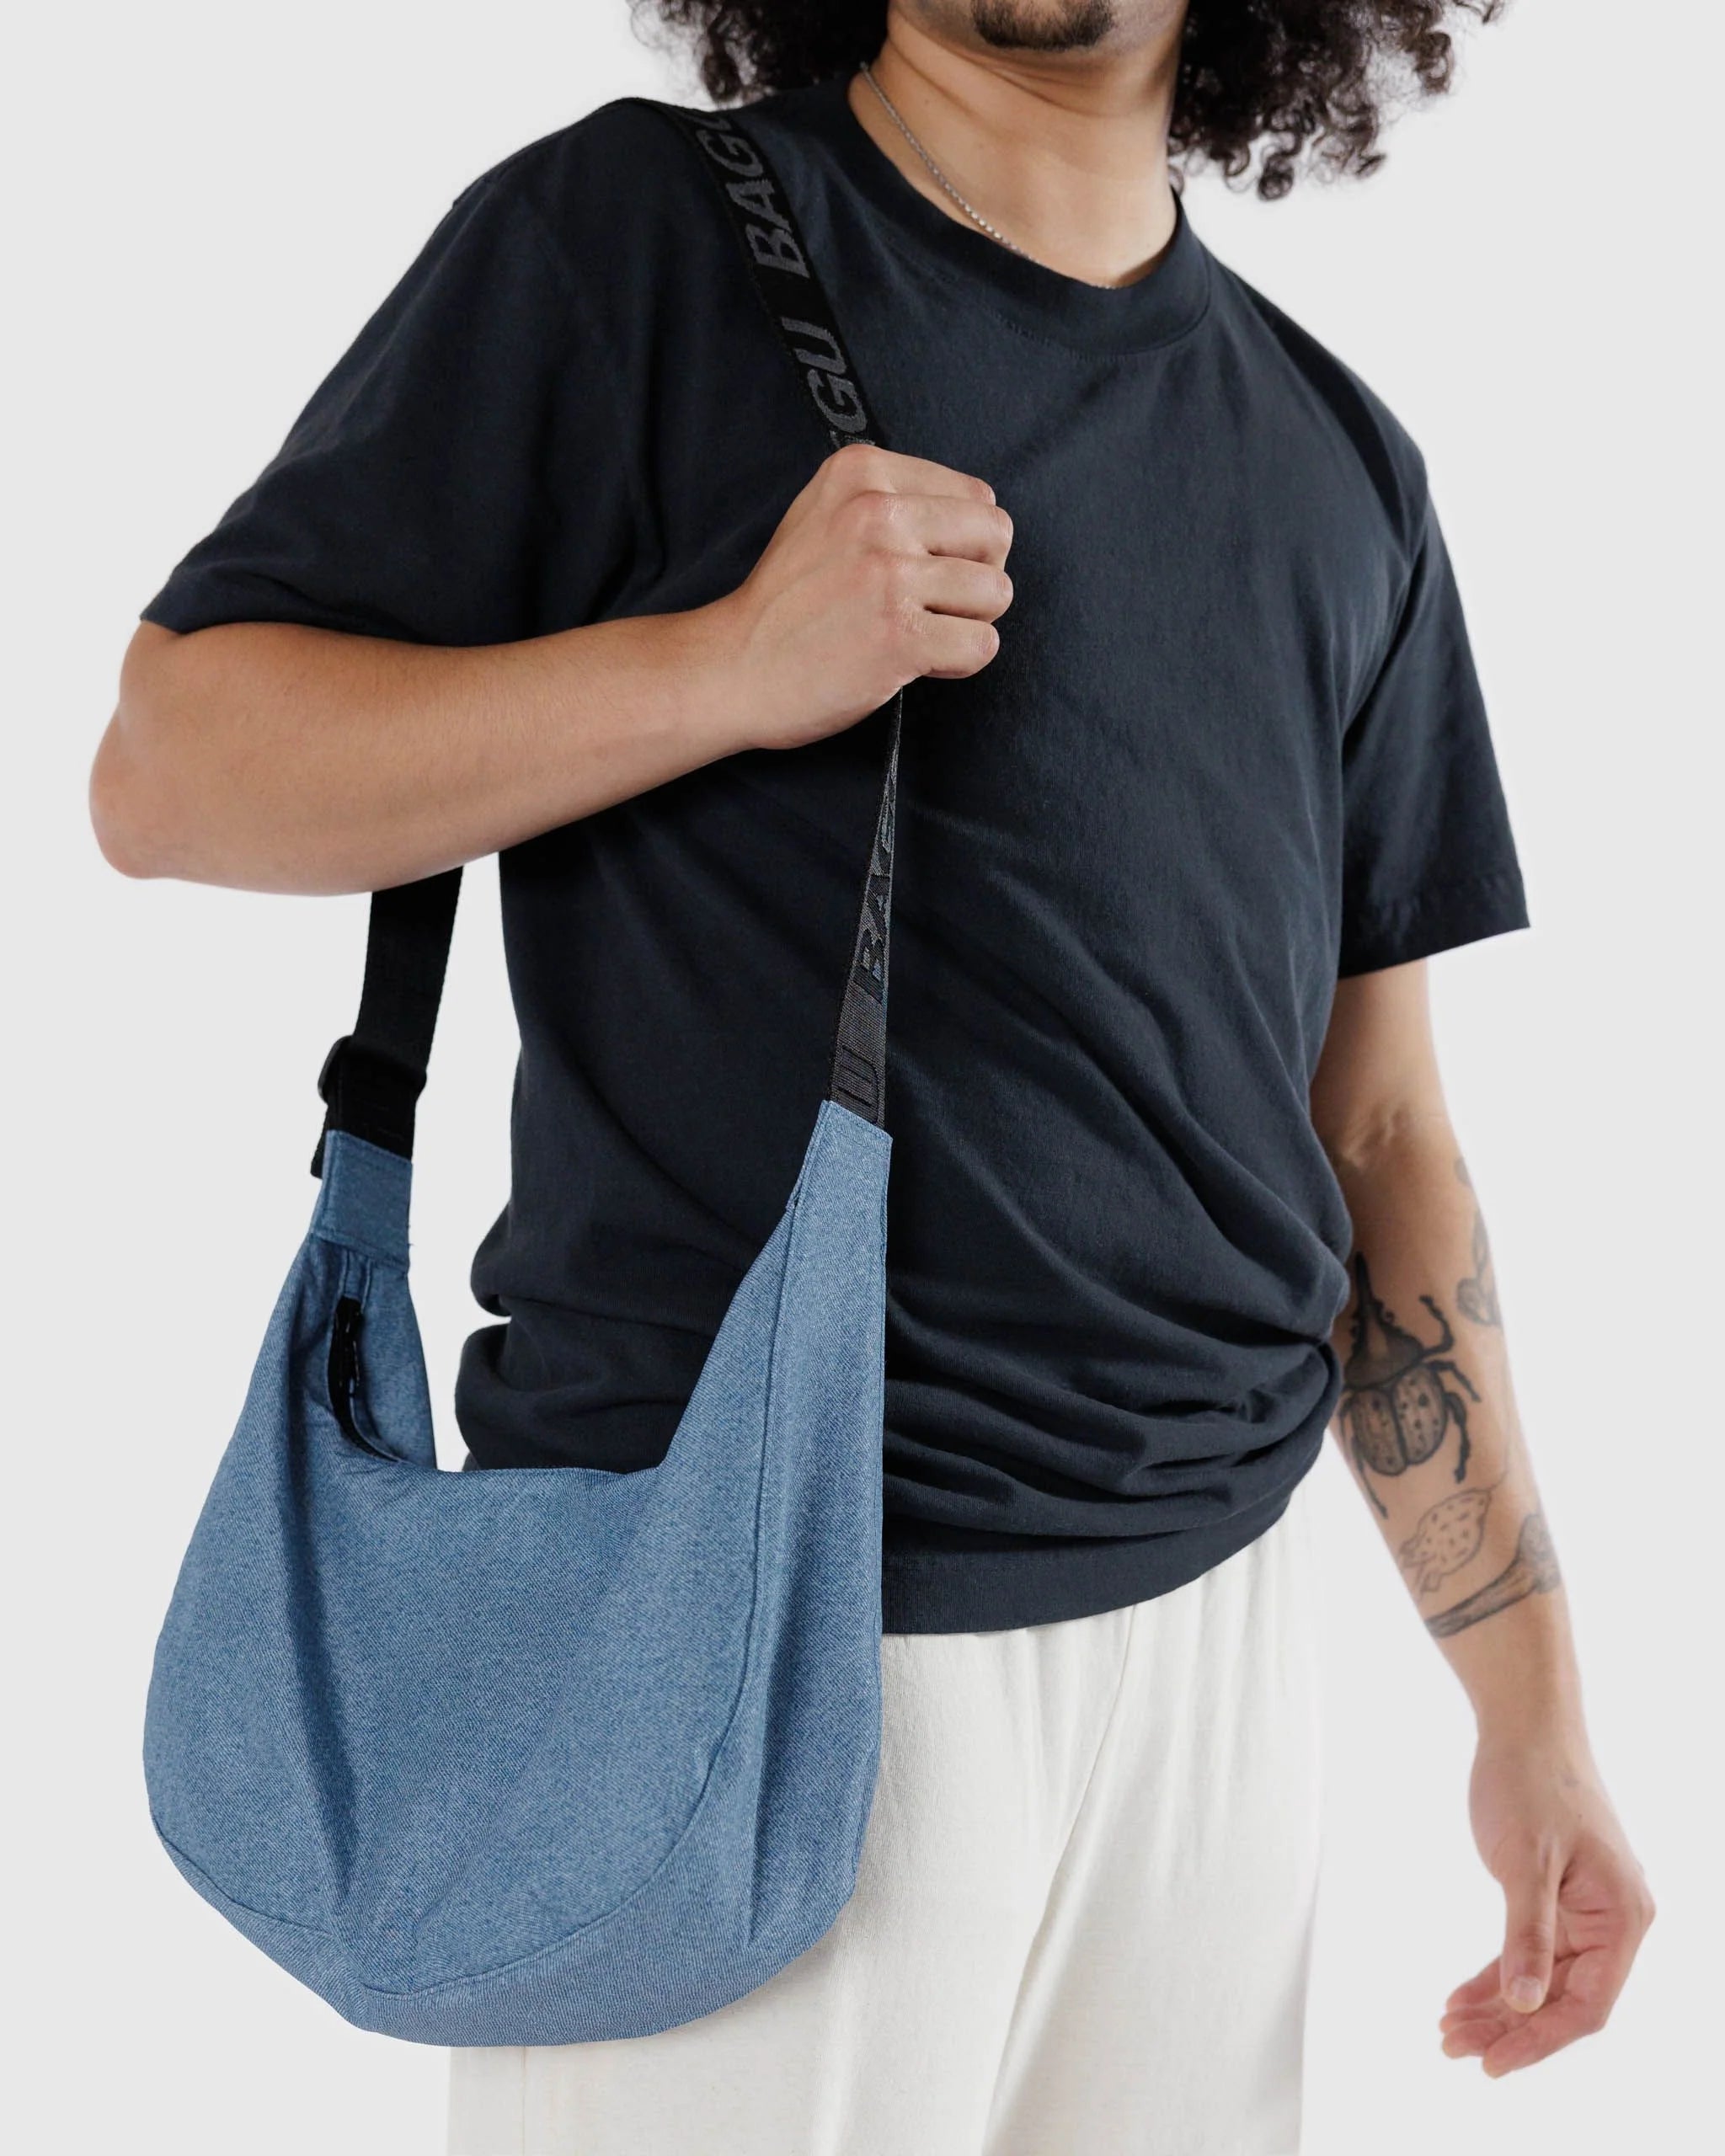 Baggu - Medium Nylon Crescent Bag | Digital Denim